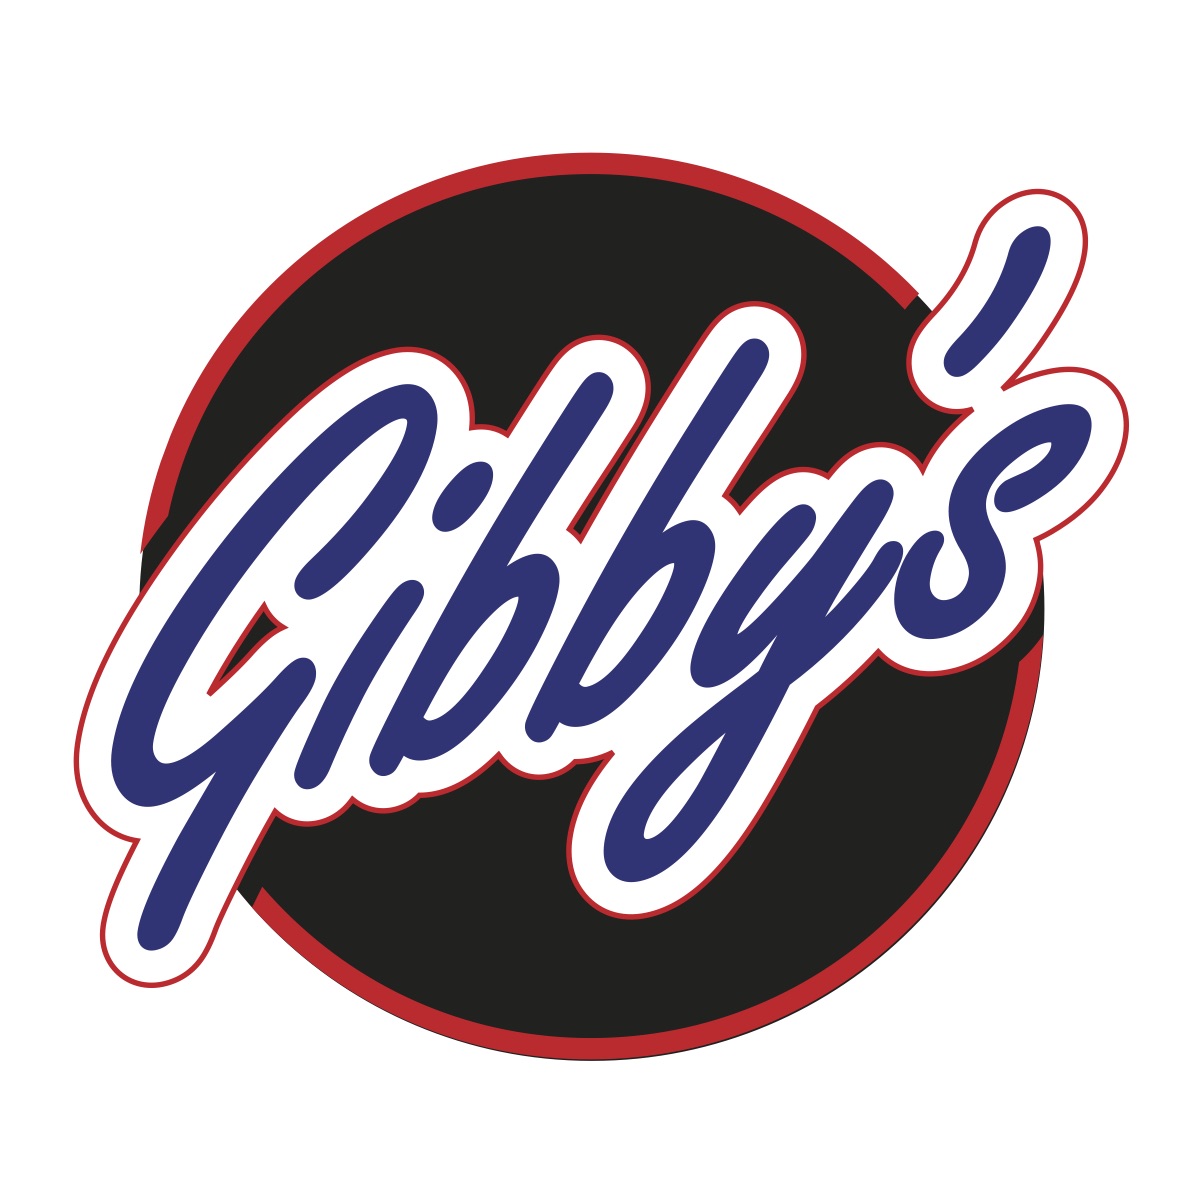 Gibby's